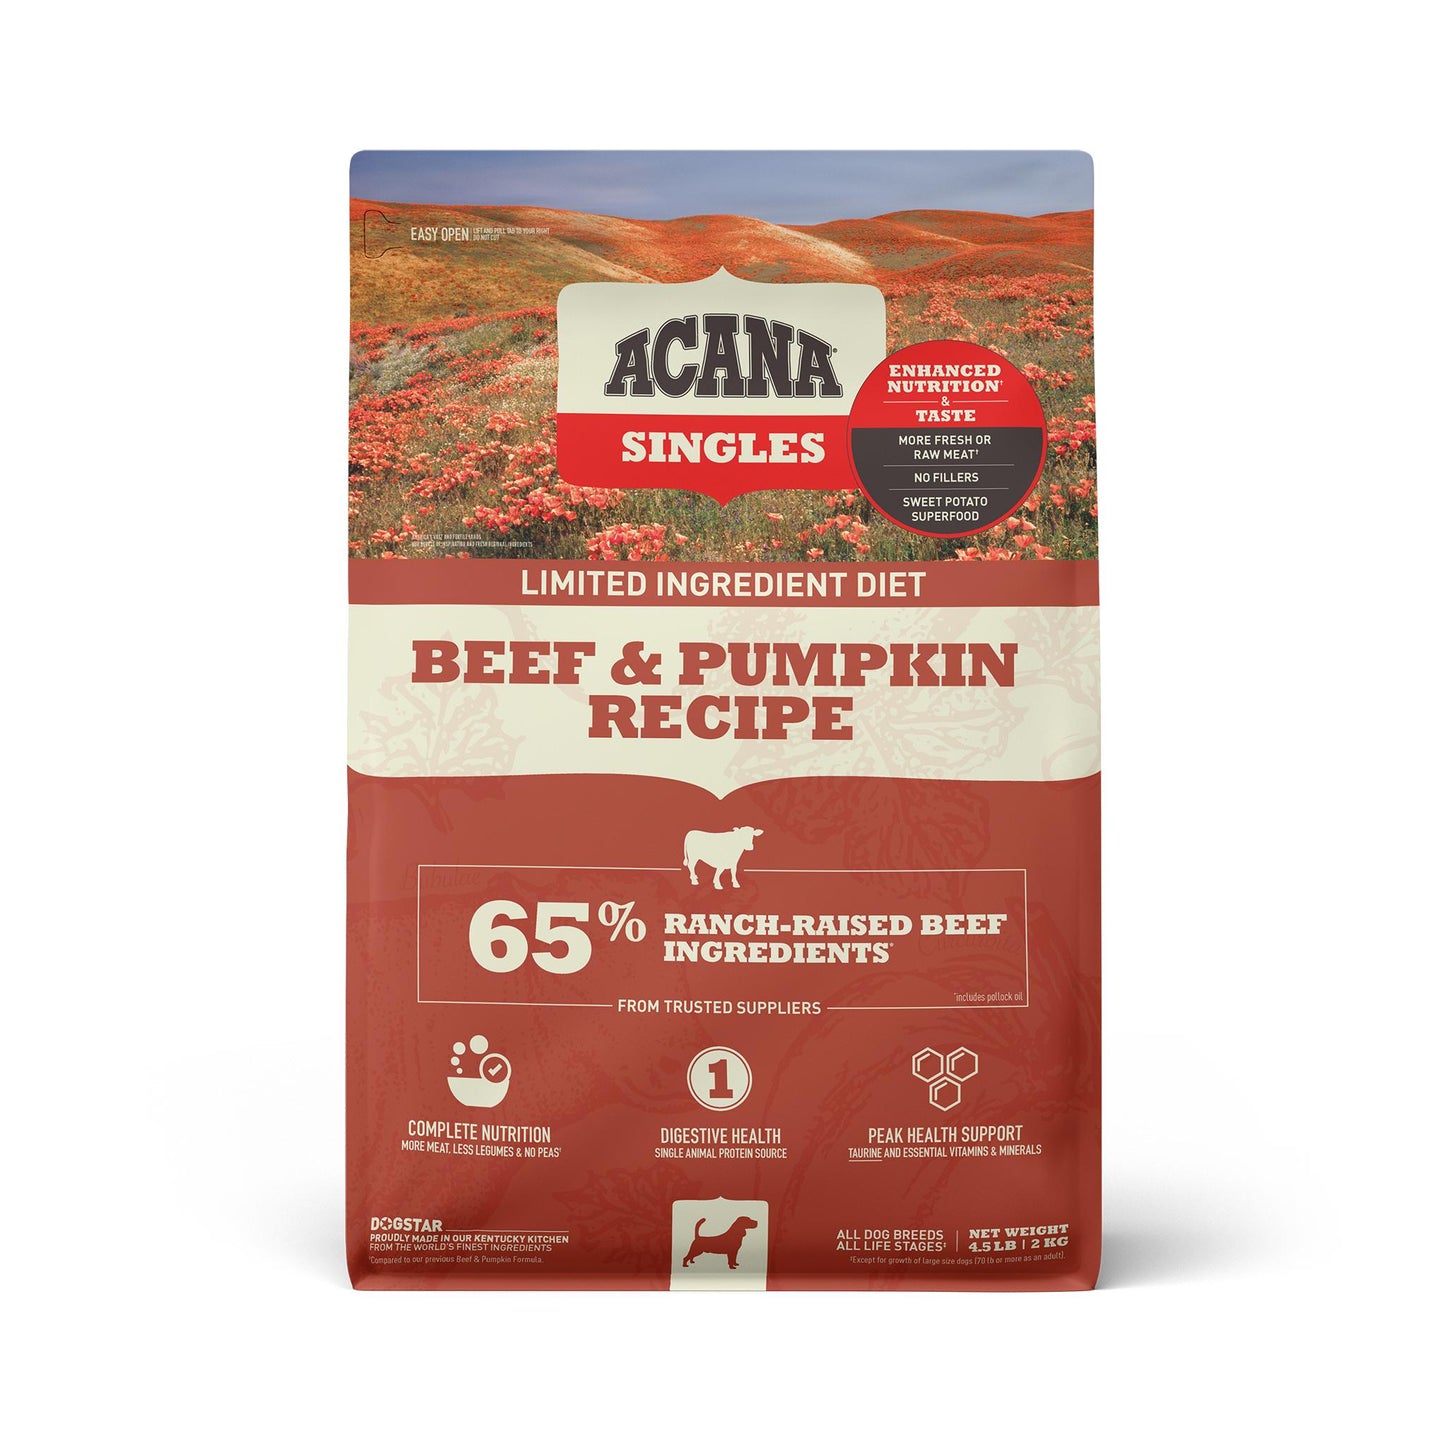 ACANA Singles Limited Ingredient Beef & Pumpkin Grain-Free Dry Dog Food, 4.5-lb